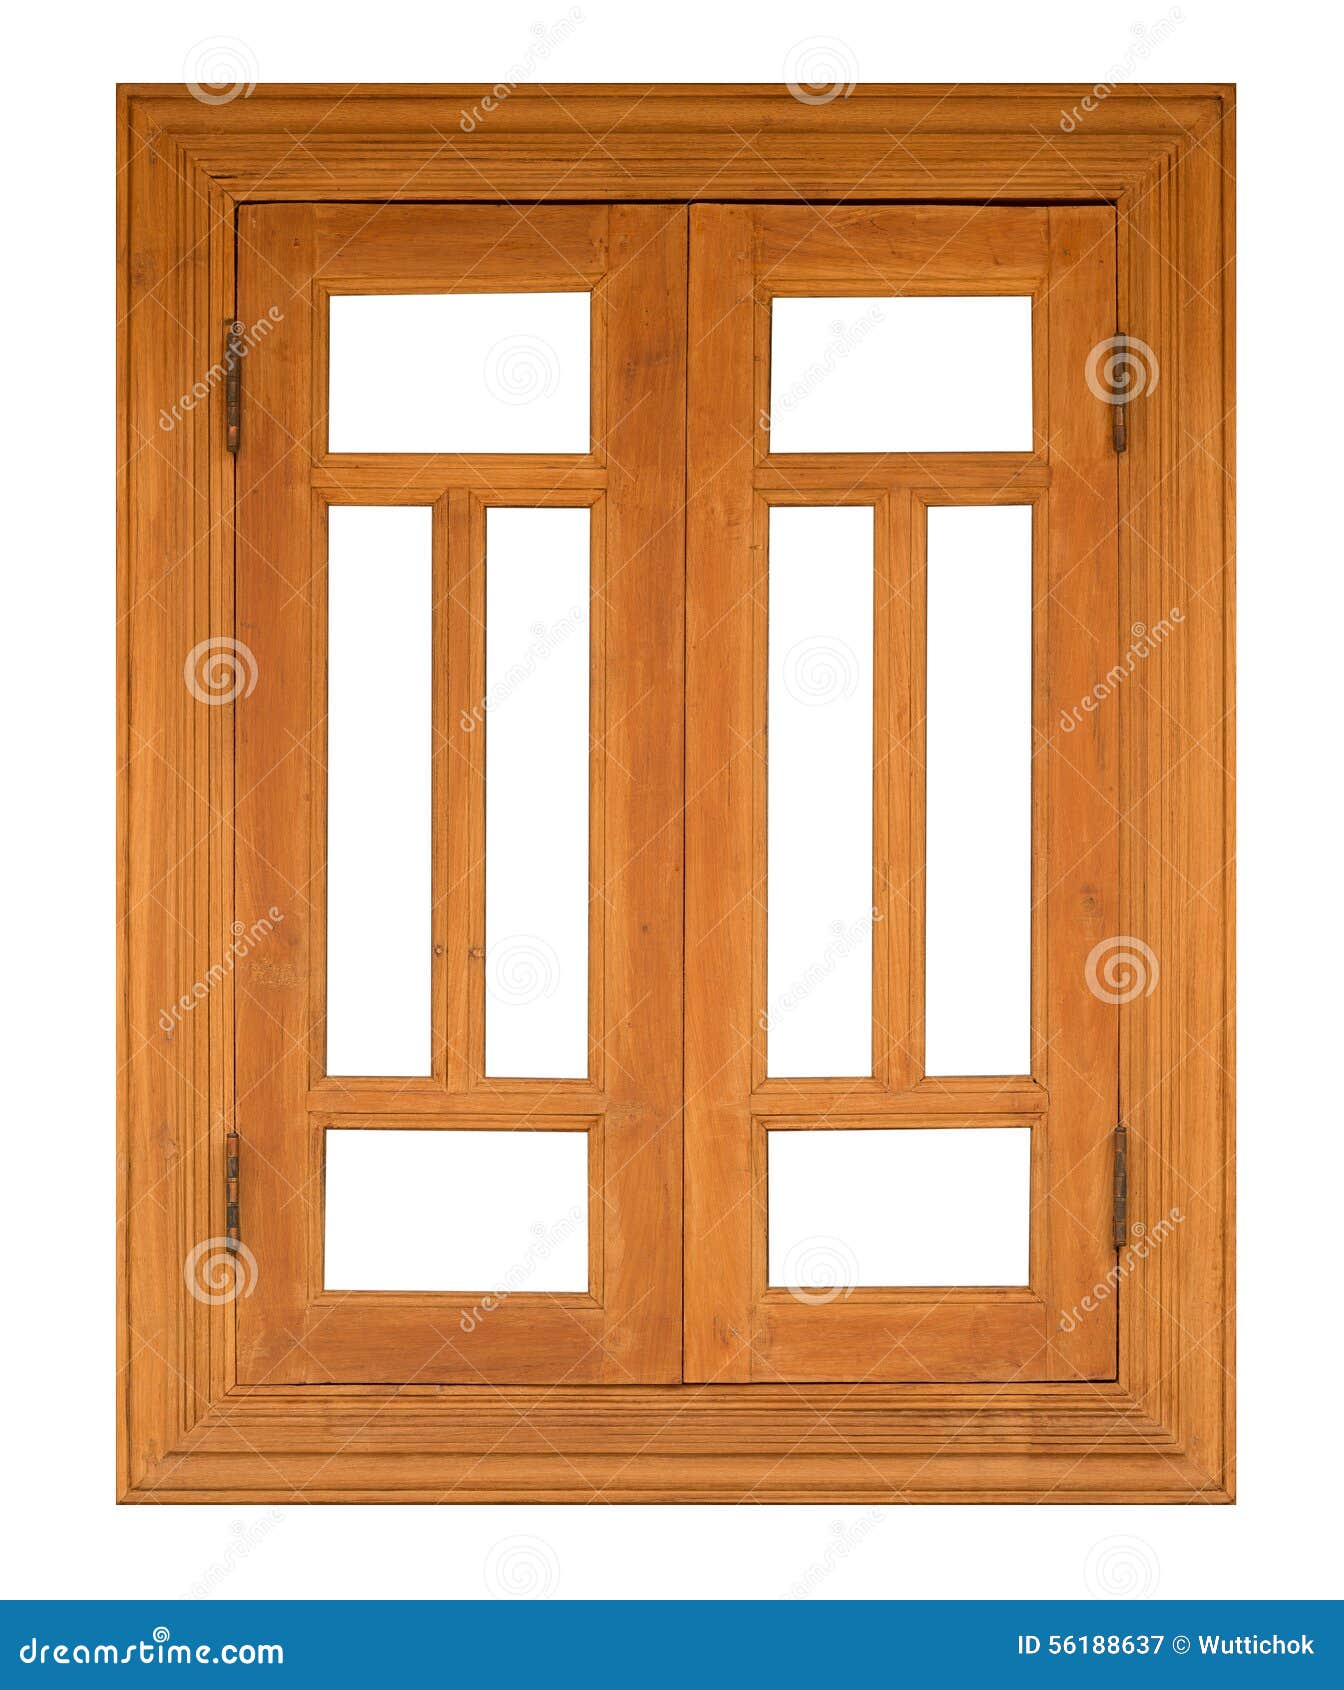 wood casement window